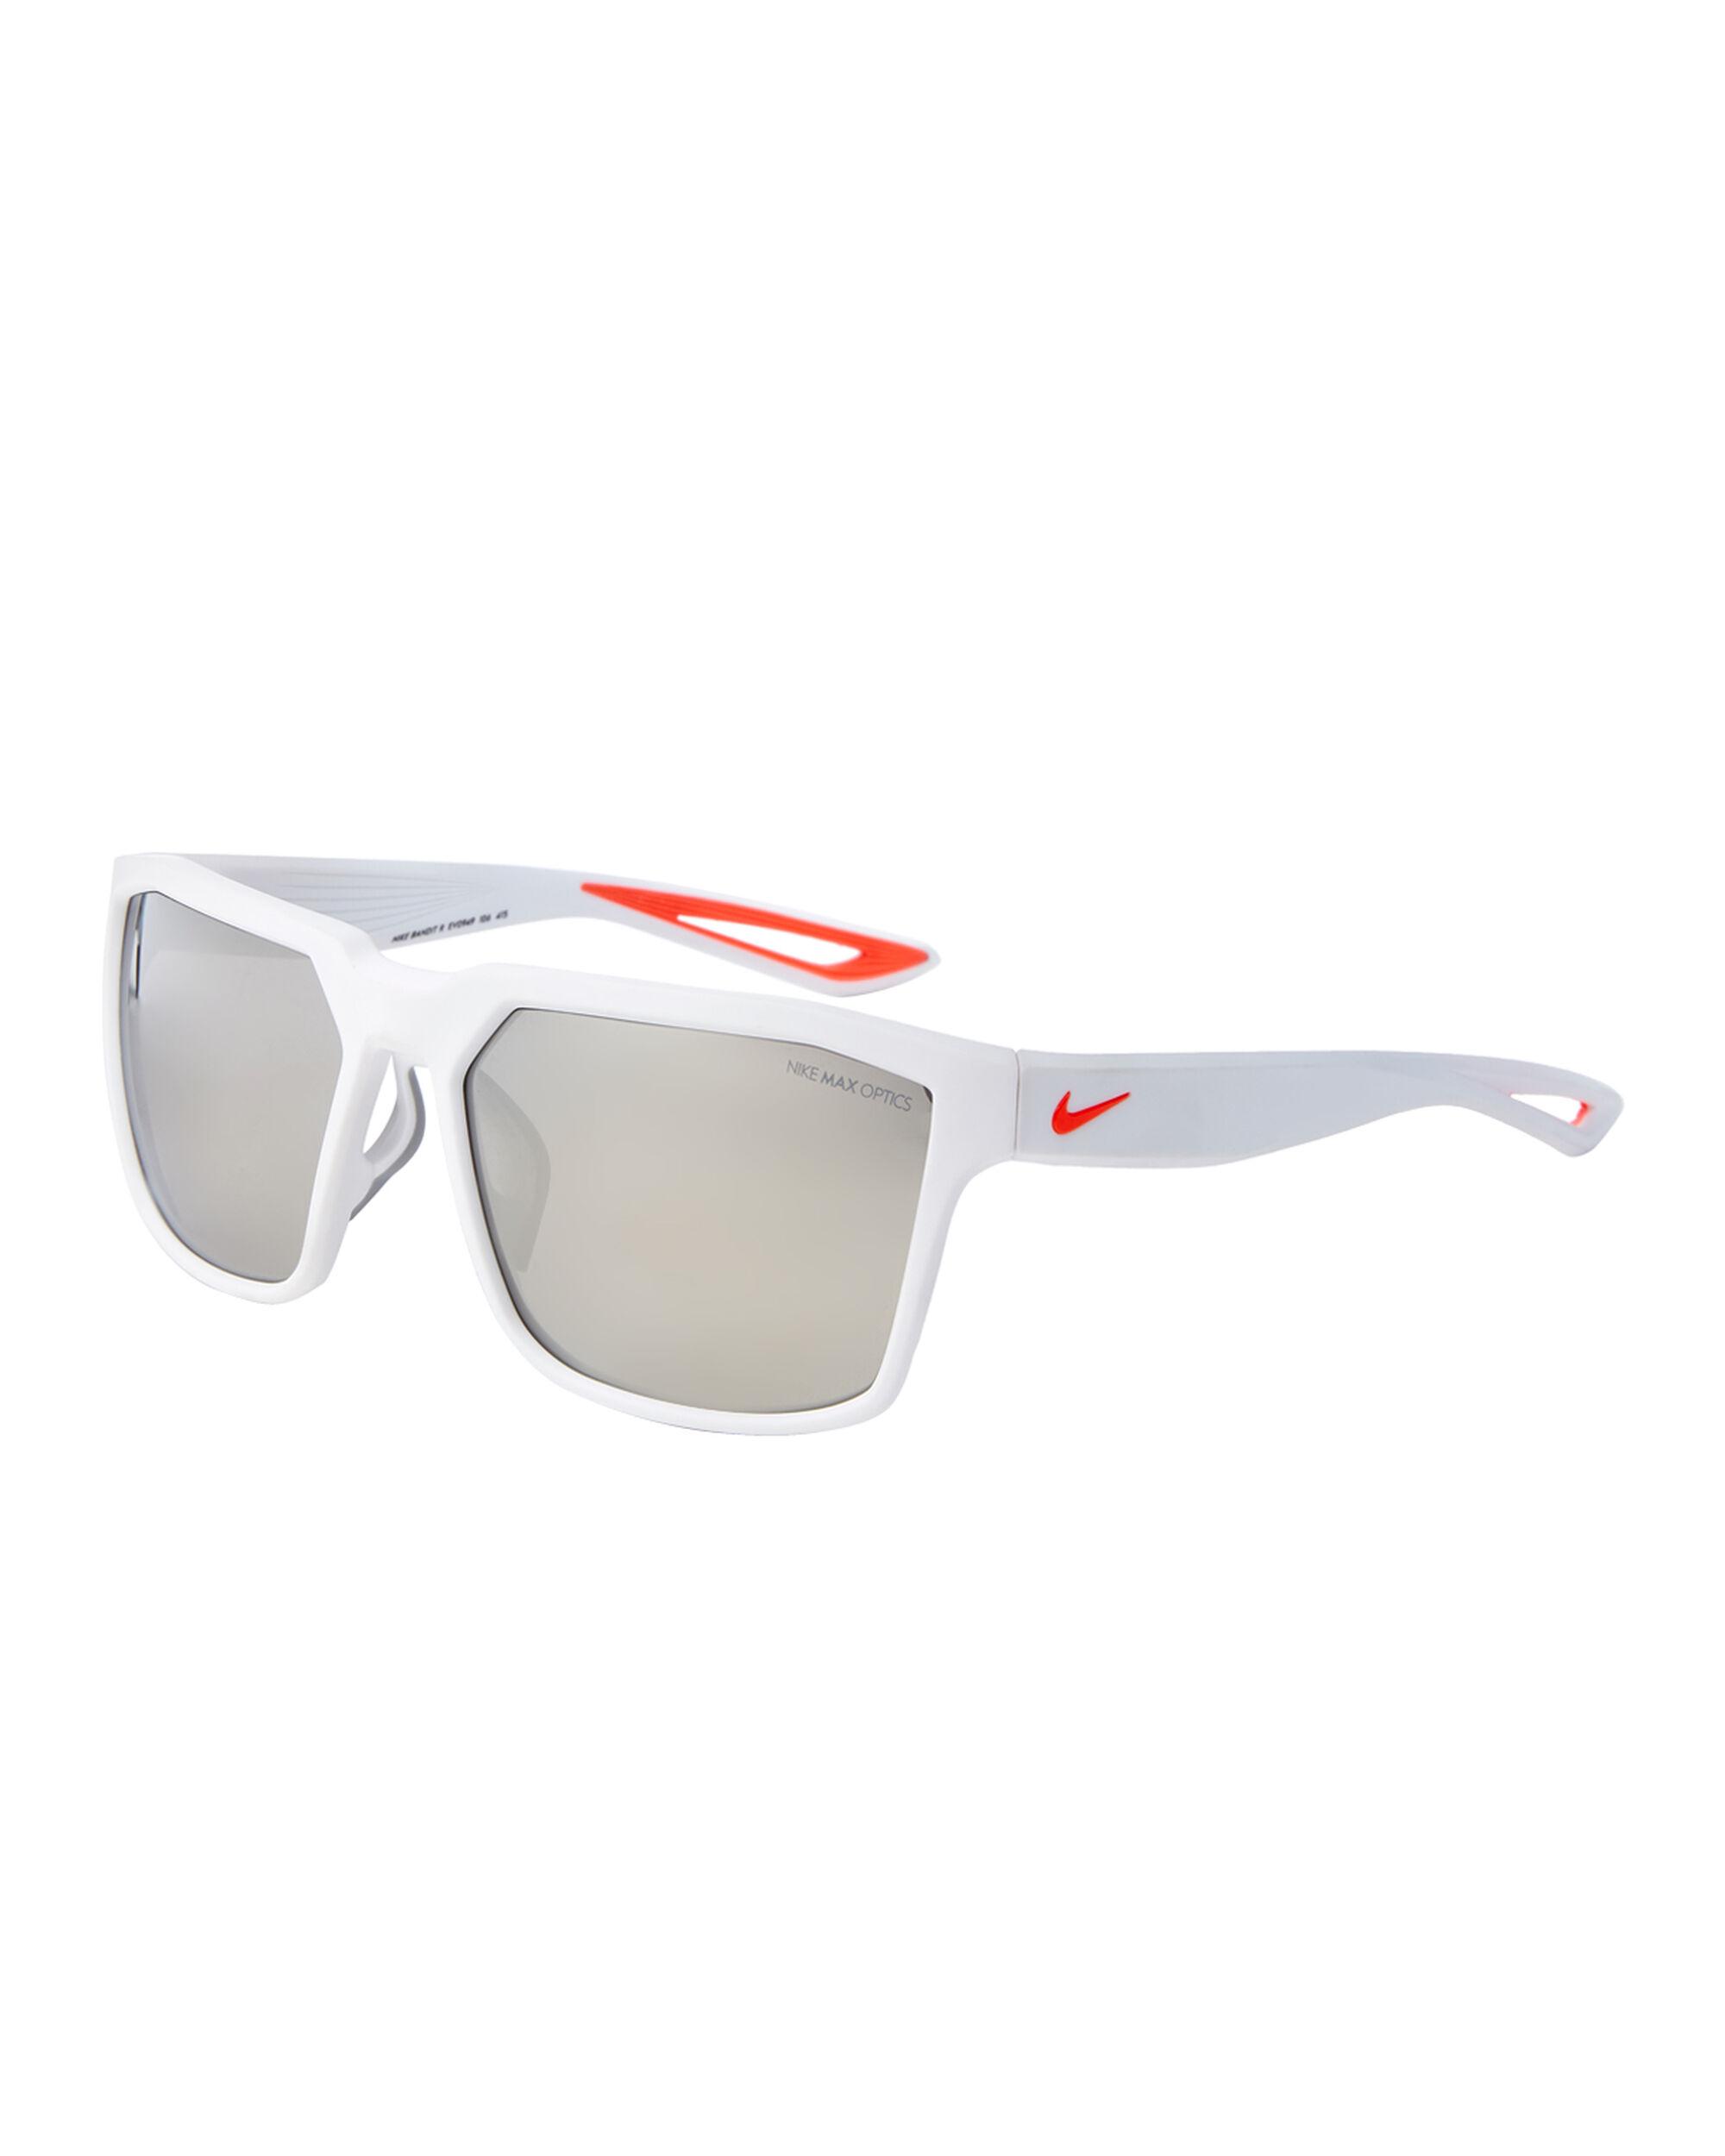 Nike Ev0949 White Bandit Square Sunglasses in White for Men - Lyst